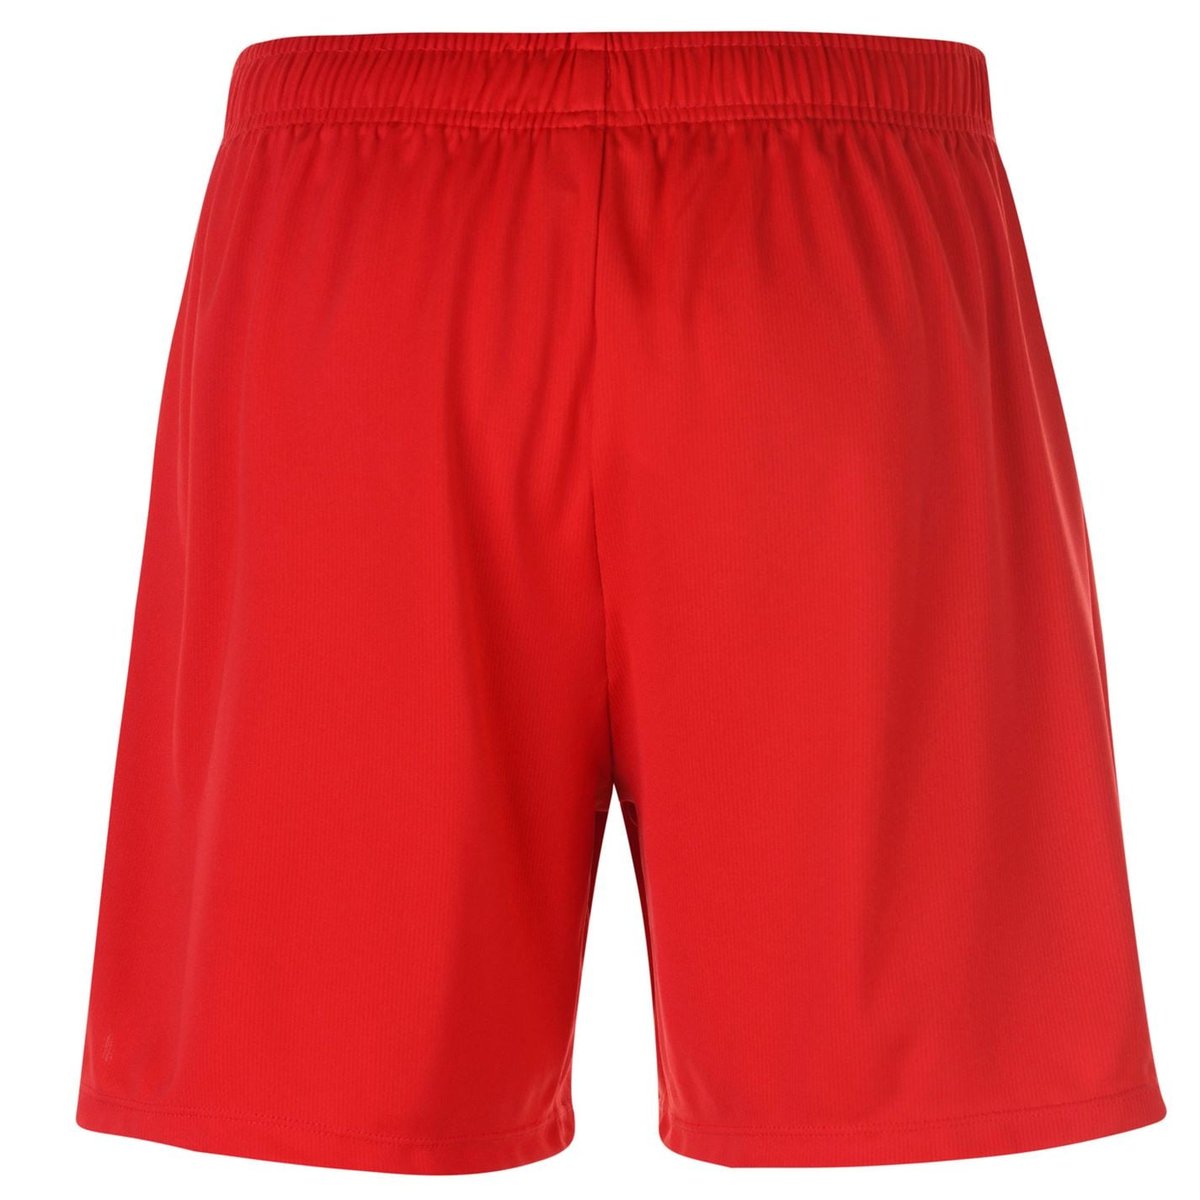 Sondico Mens Core Football Shorts Red Training Activewear Sports Pants ...